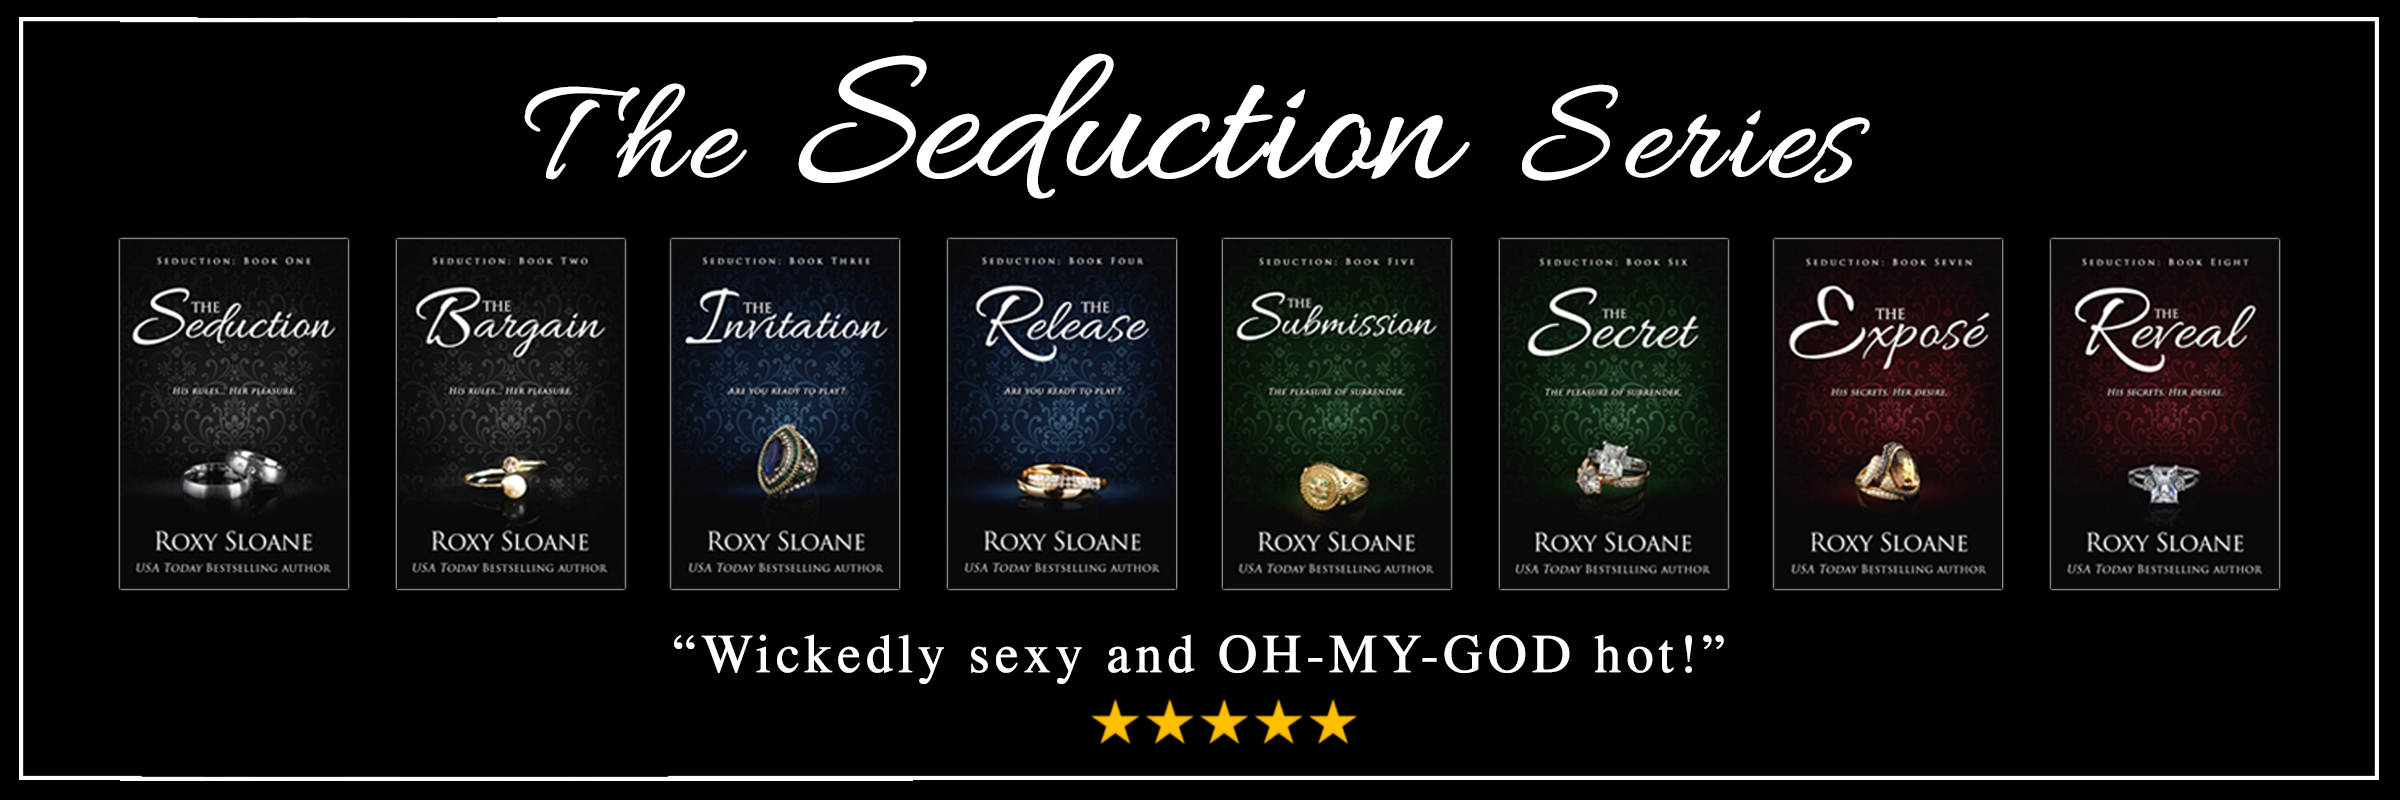 roxy seduction series slider